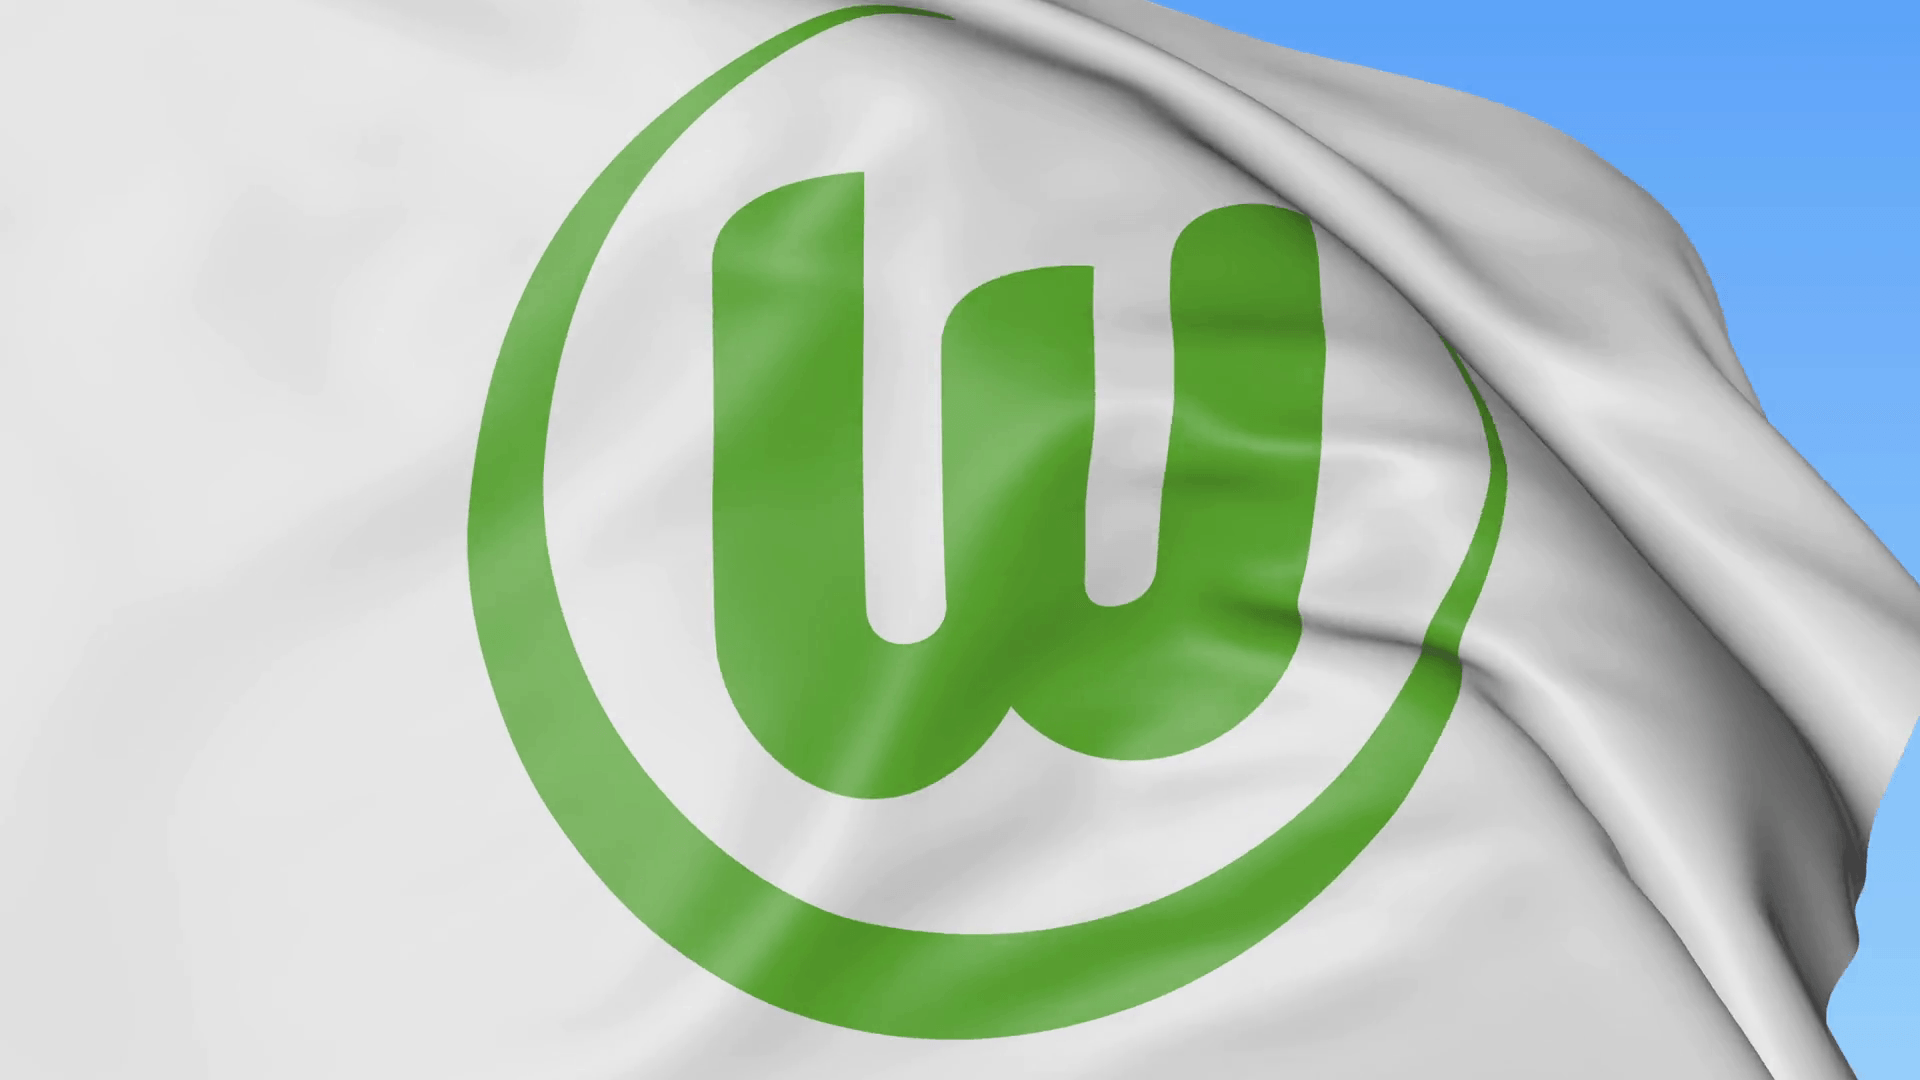 Close Up Of Waving Flag With VfL Wolfsburg Football Club Logo